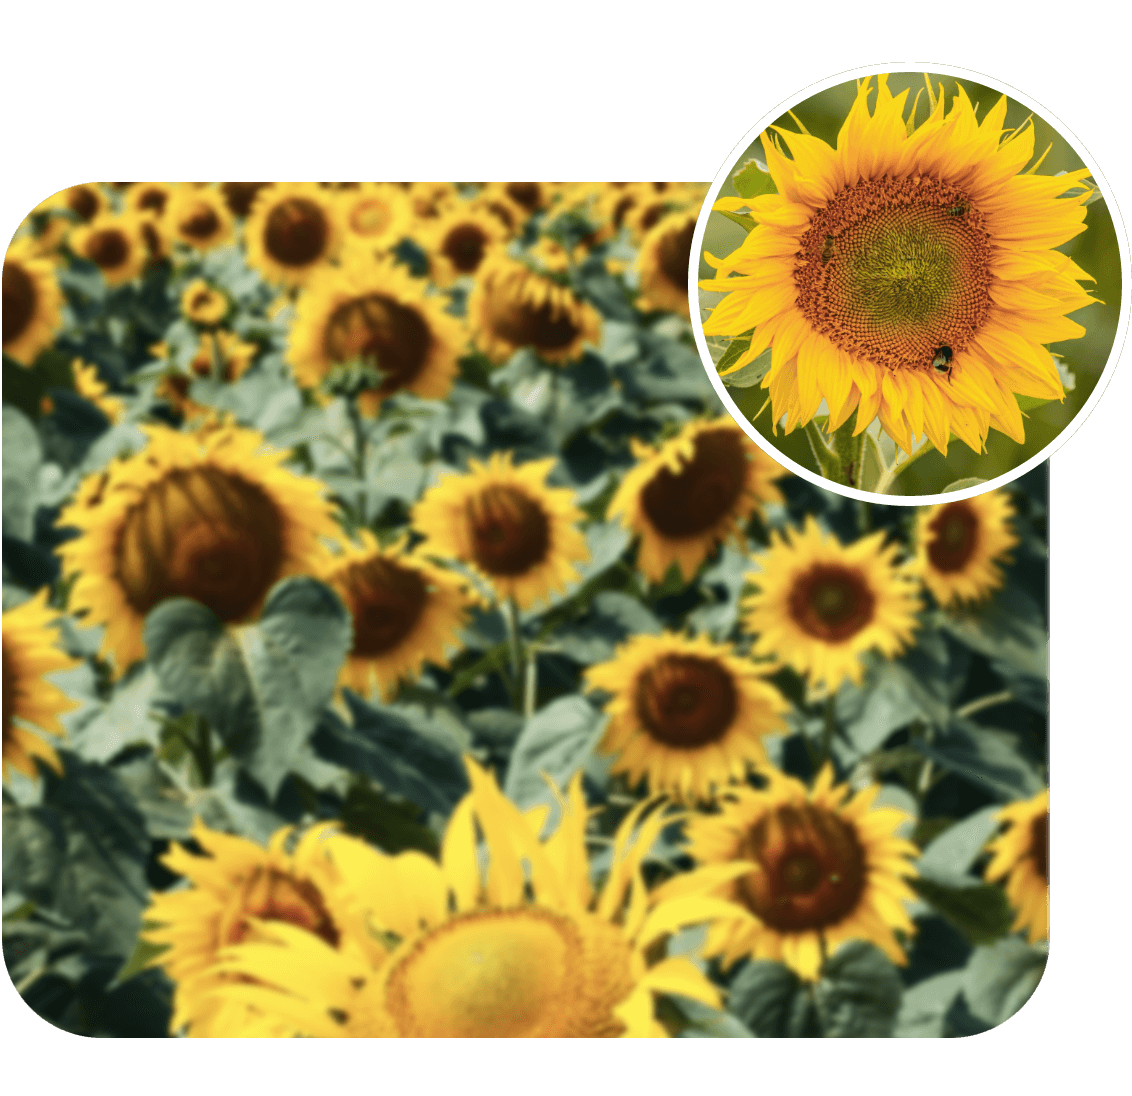 fix blurry sunflower video and enhance details using Clipfly AI video enhancer